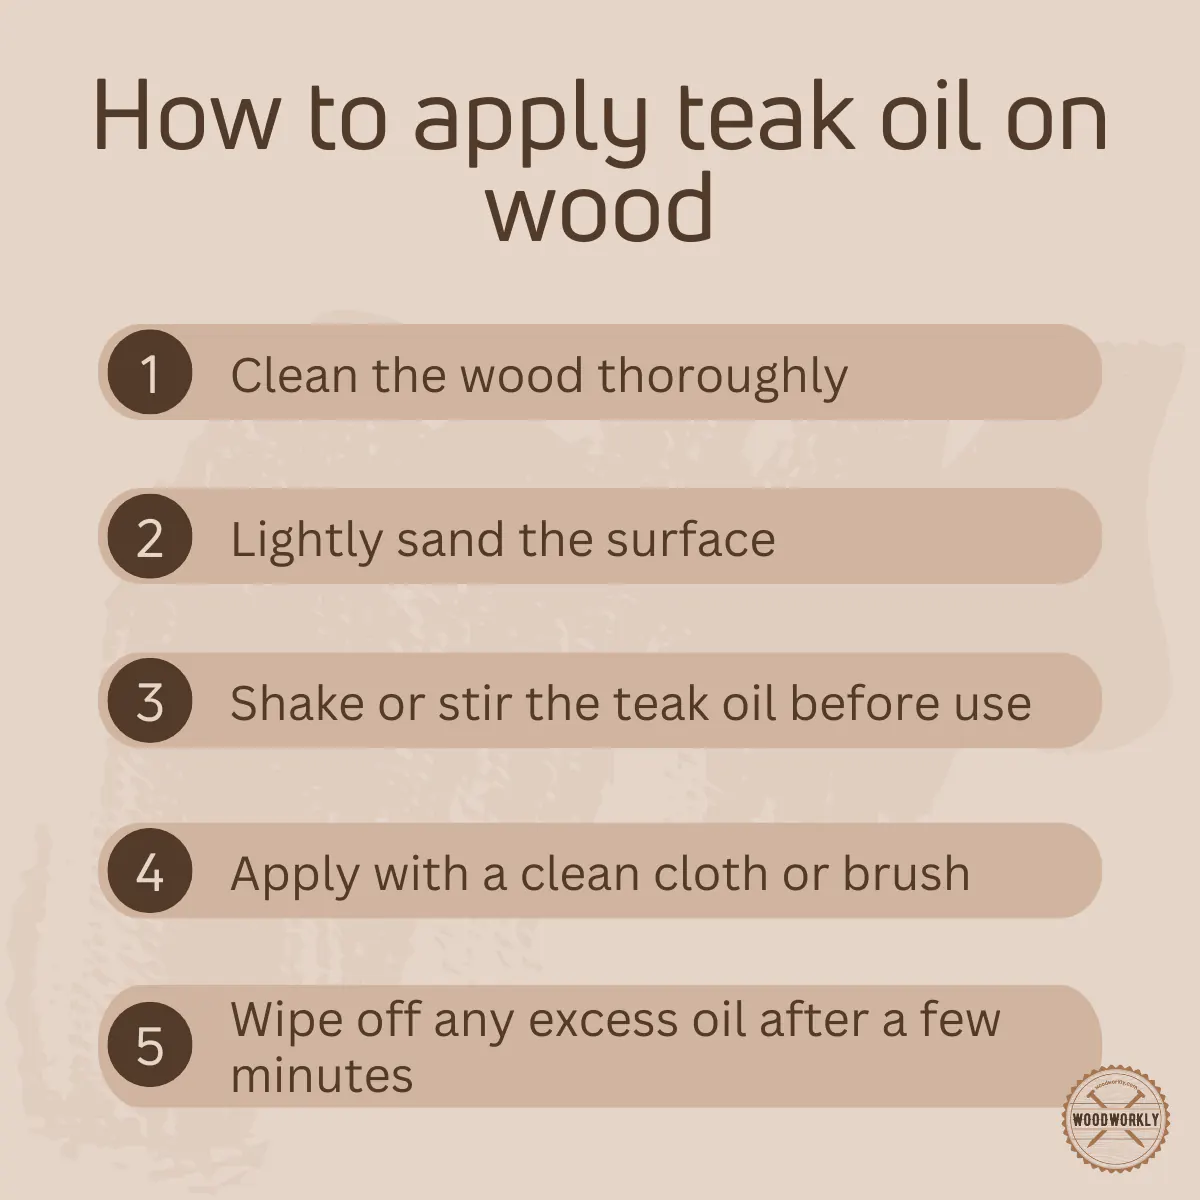 How to apply teak oil on wood